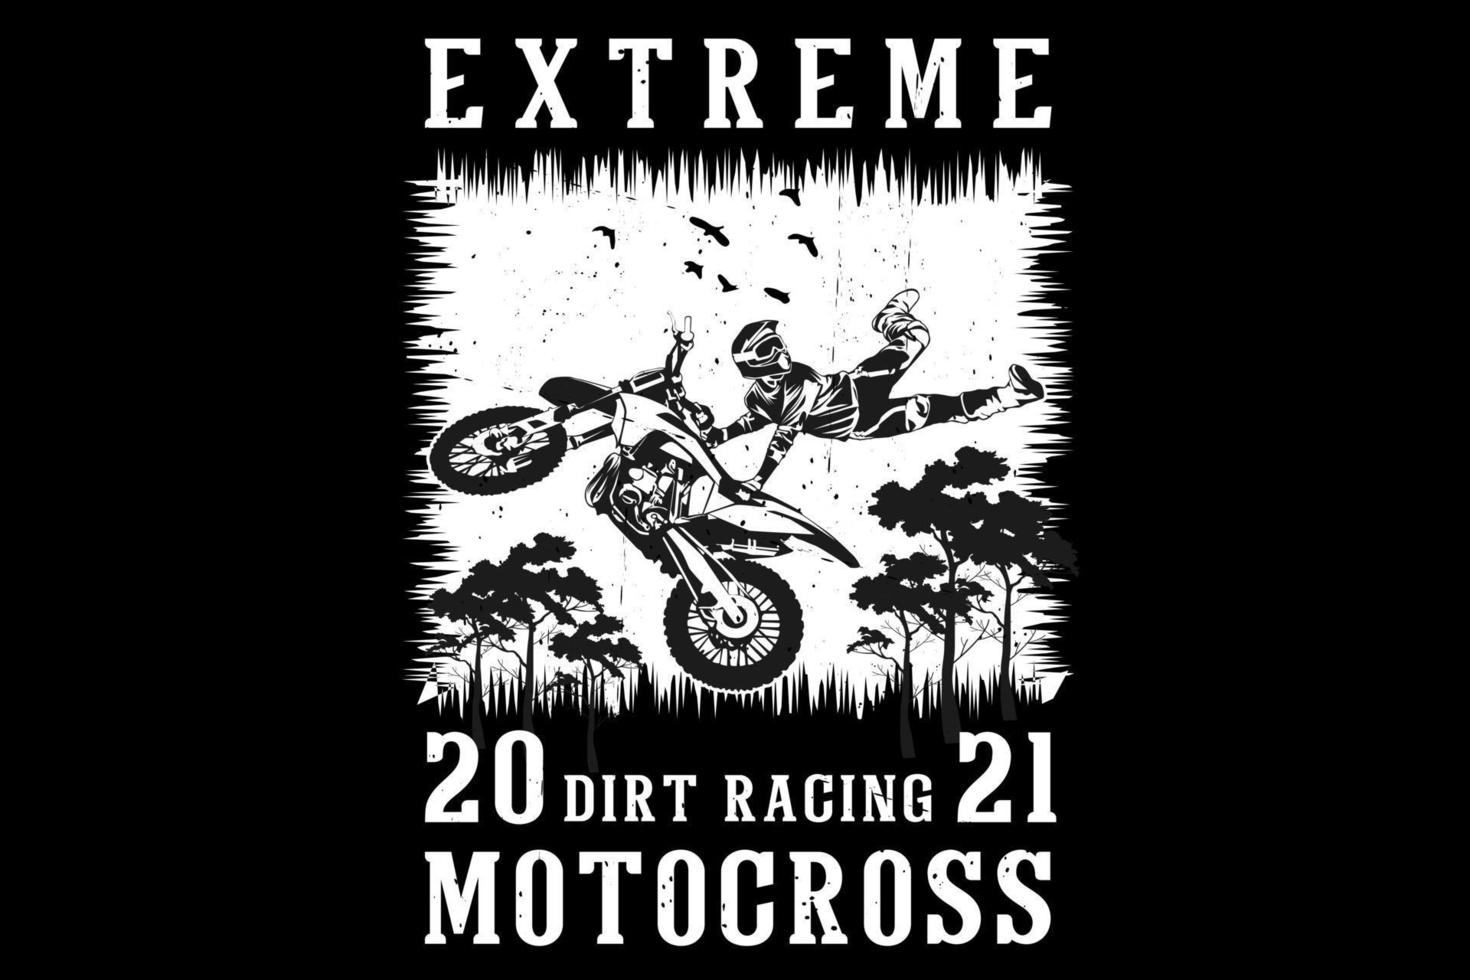 Extreme dirt racing motocross silhouette design vector